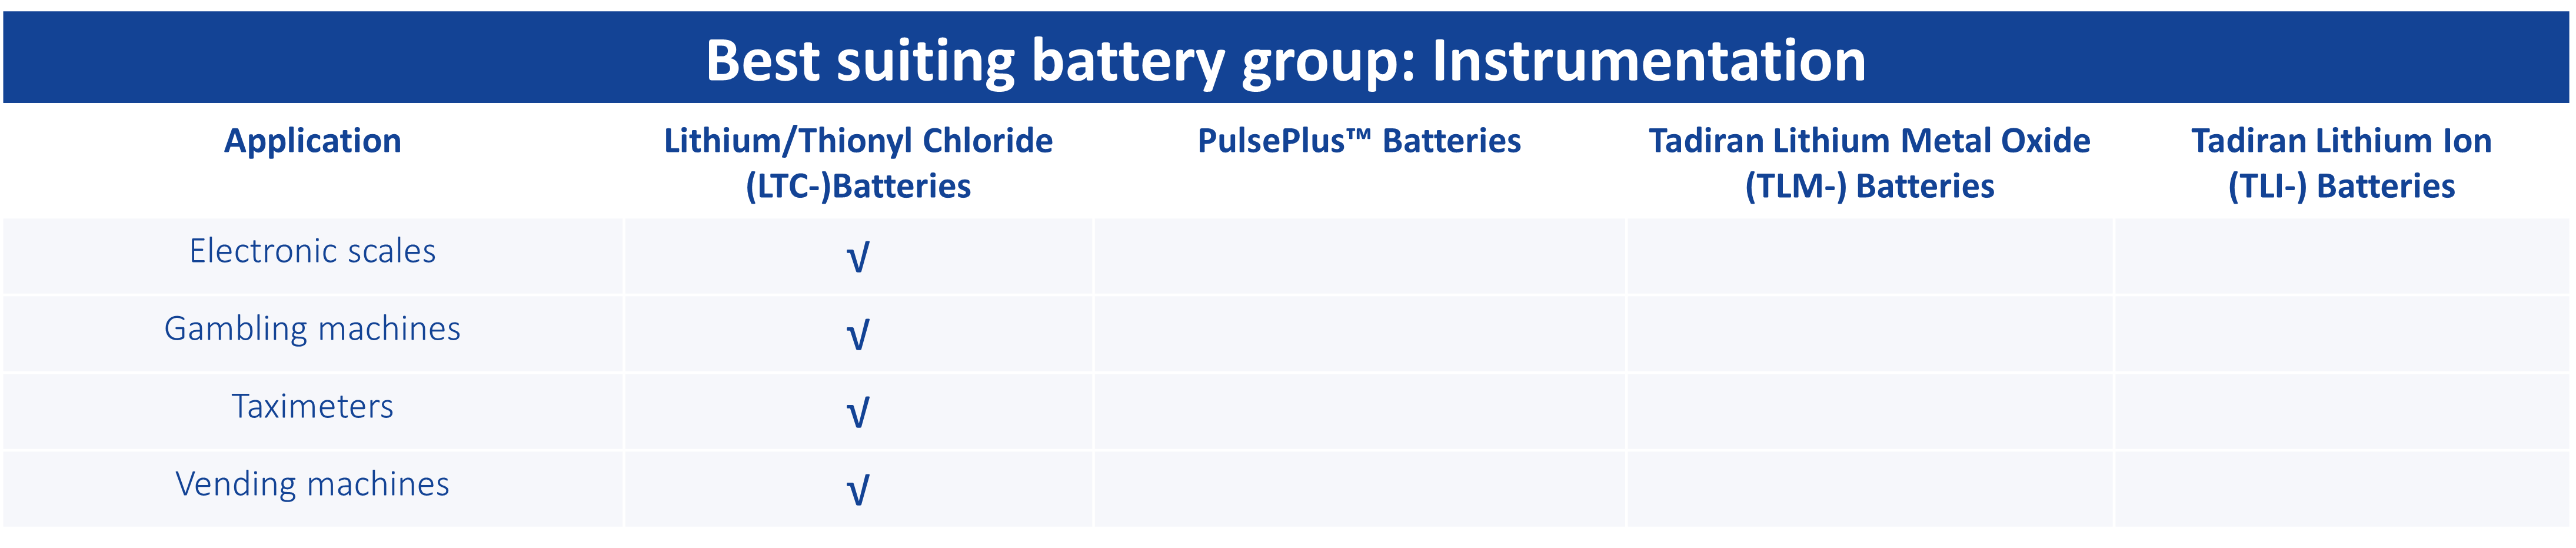 Batteries for Instrumentation Applications